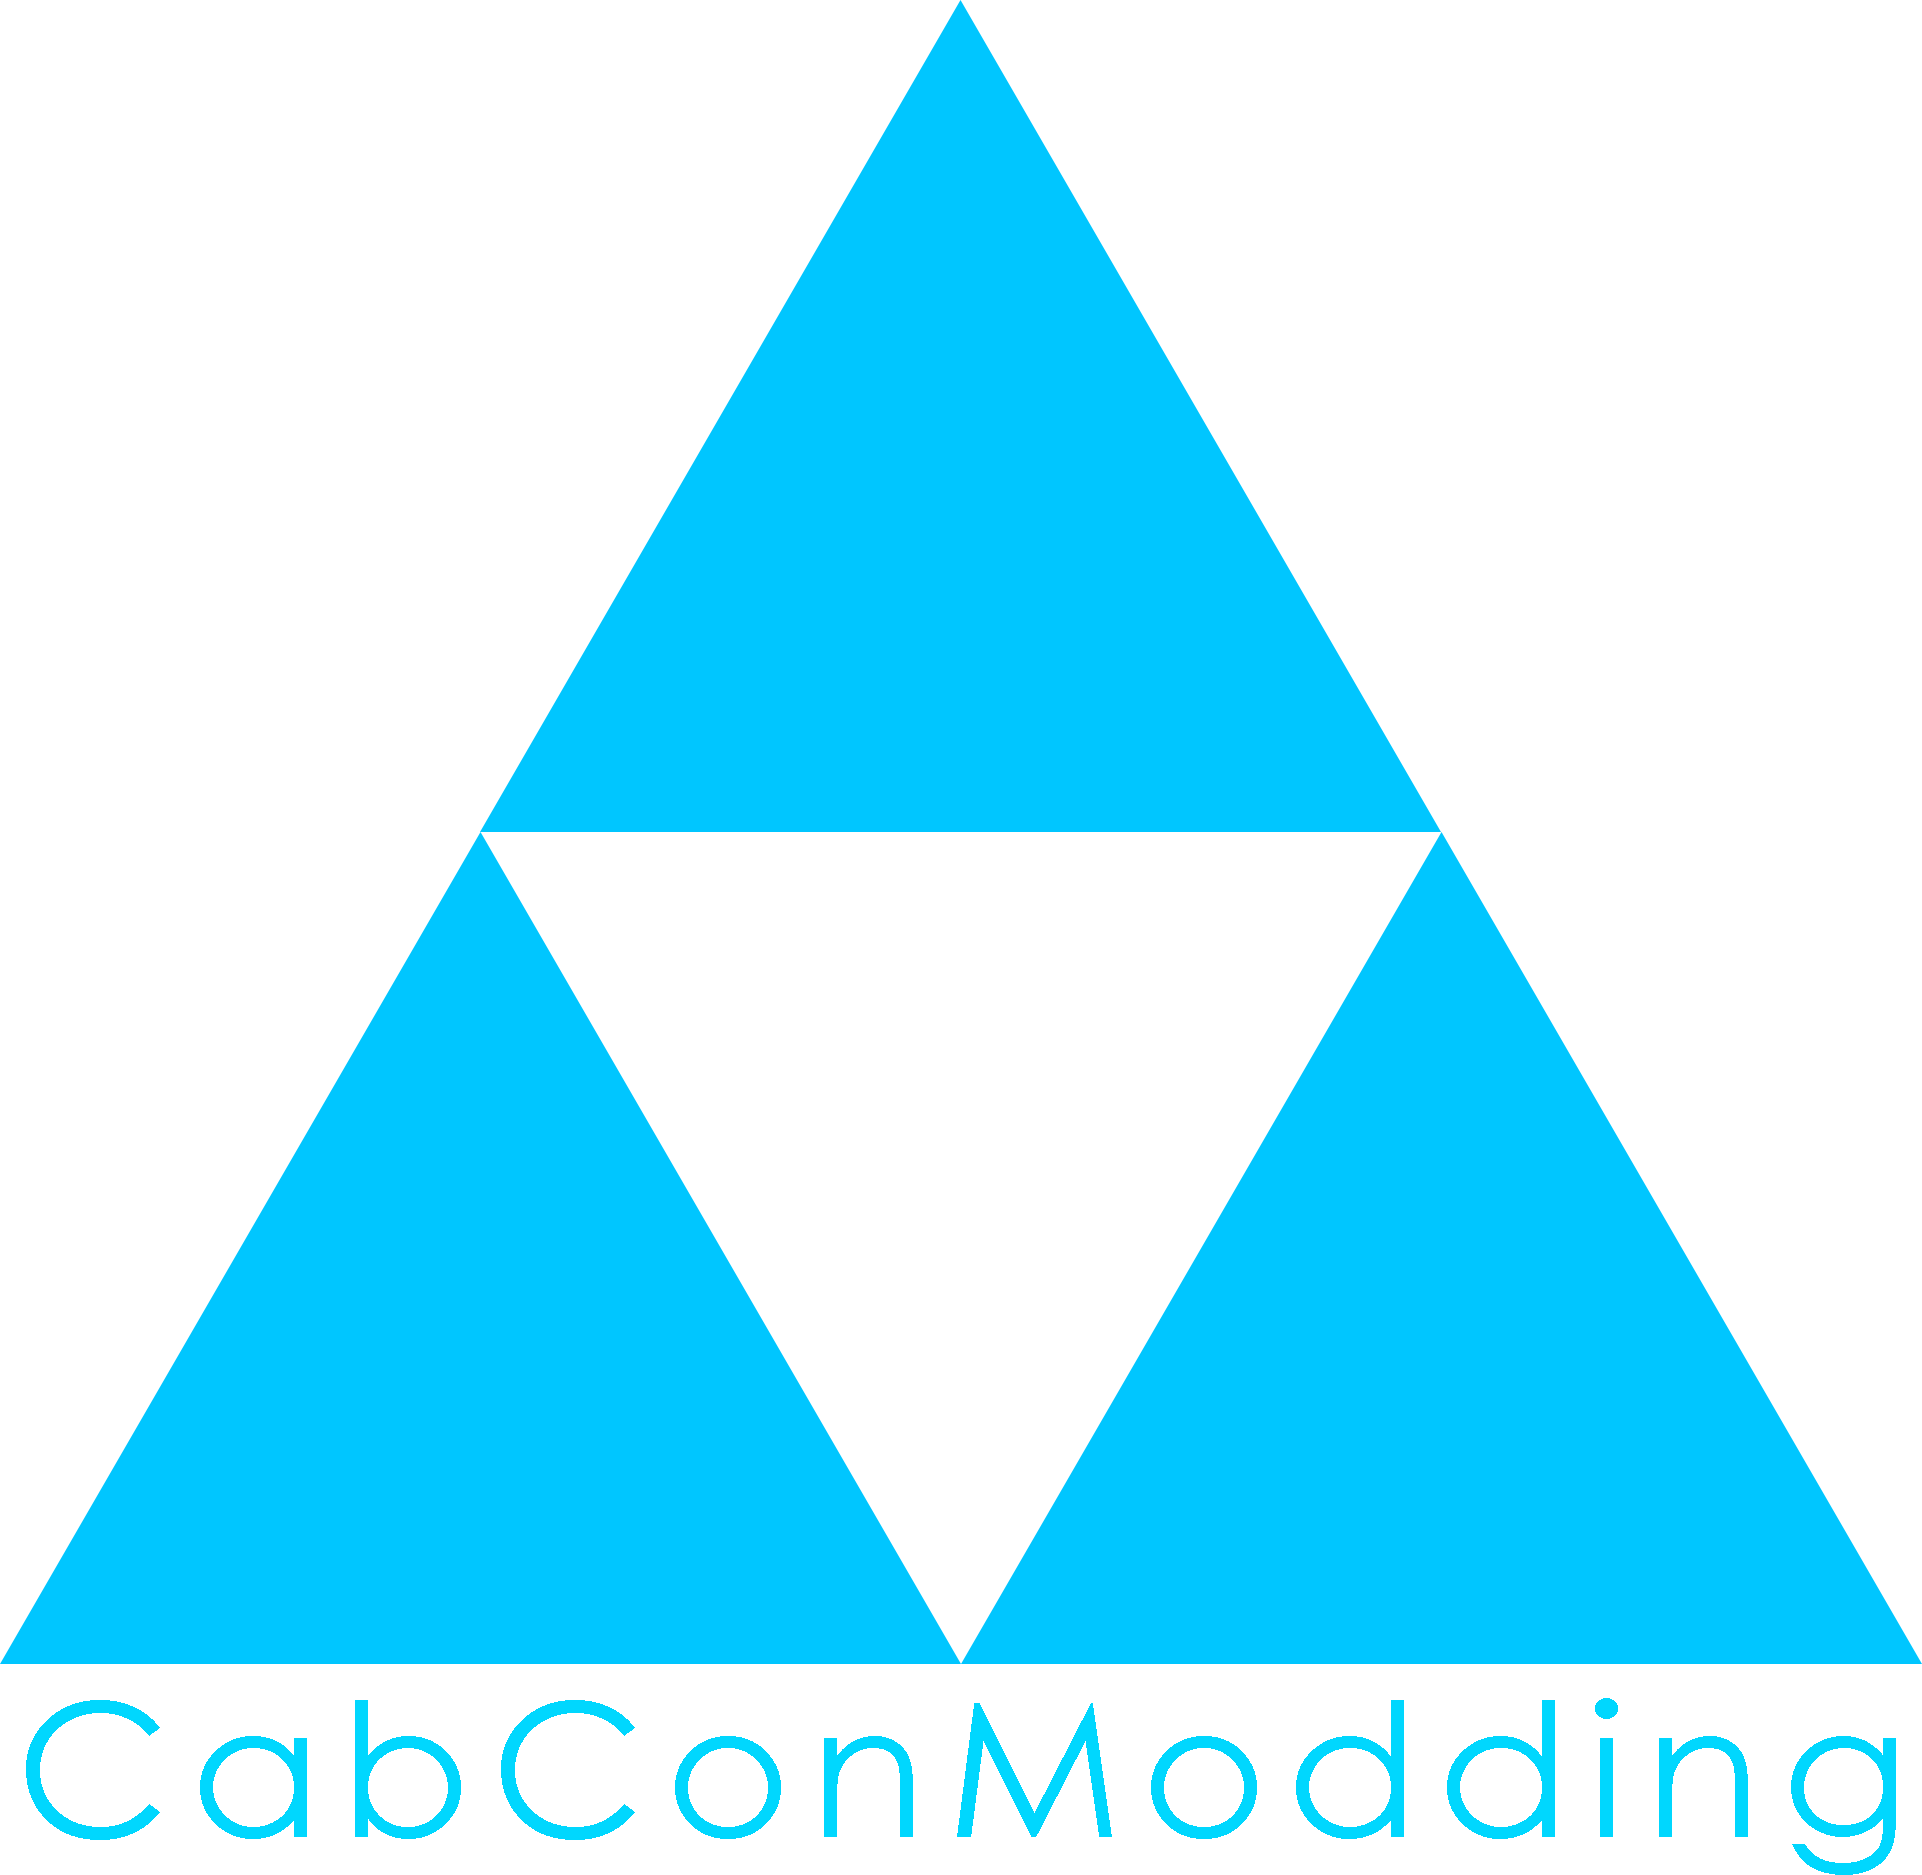 CabConModding Logo PNG Image